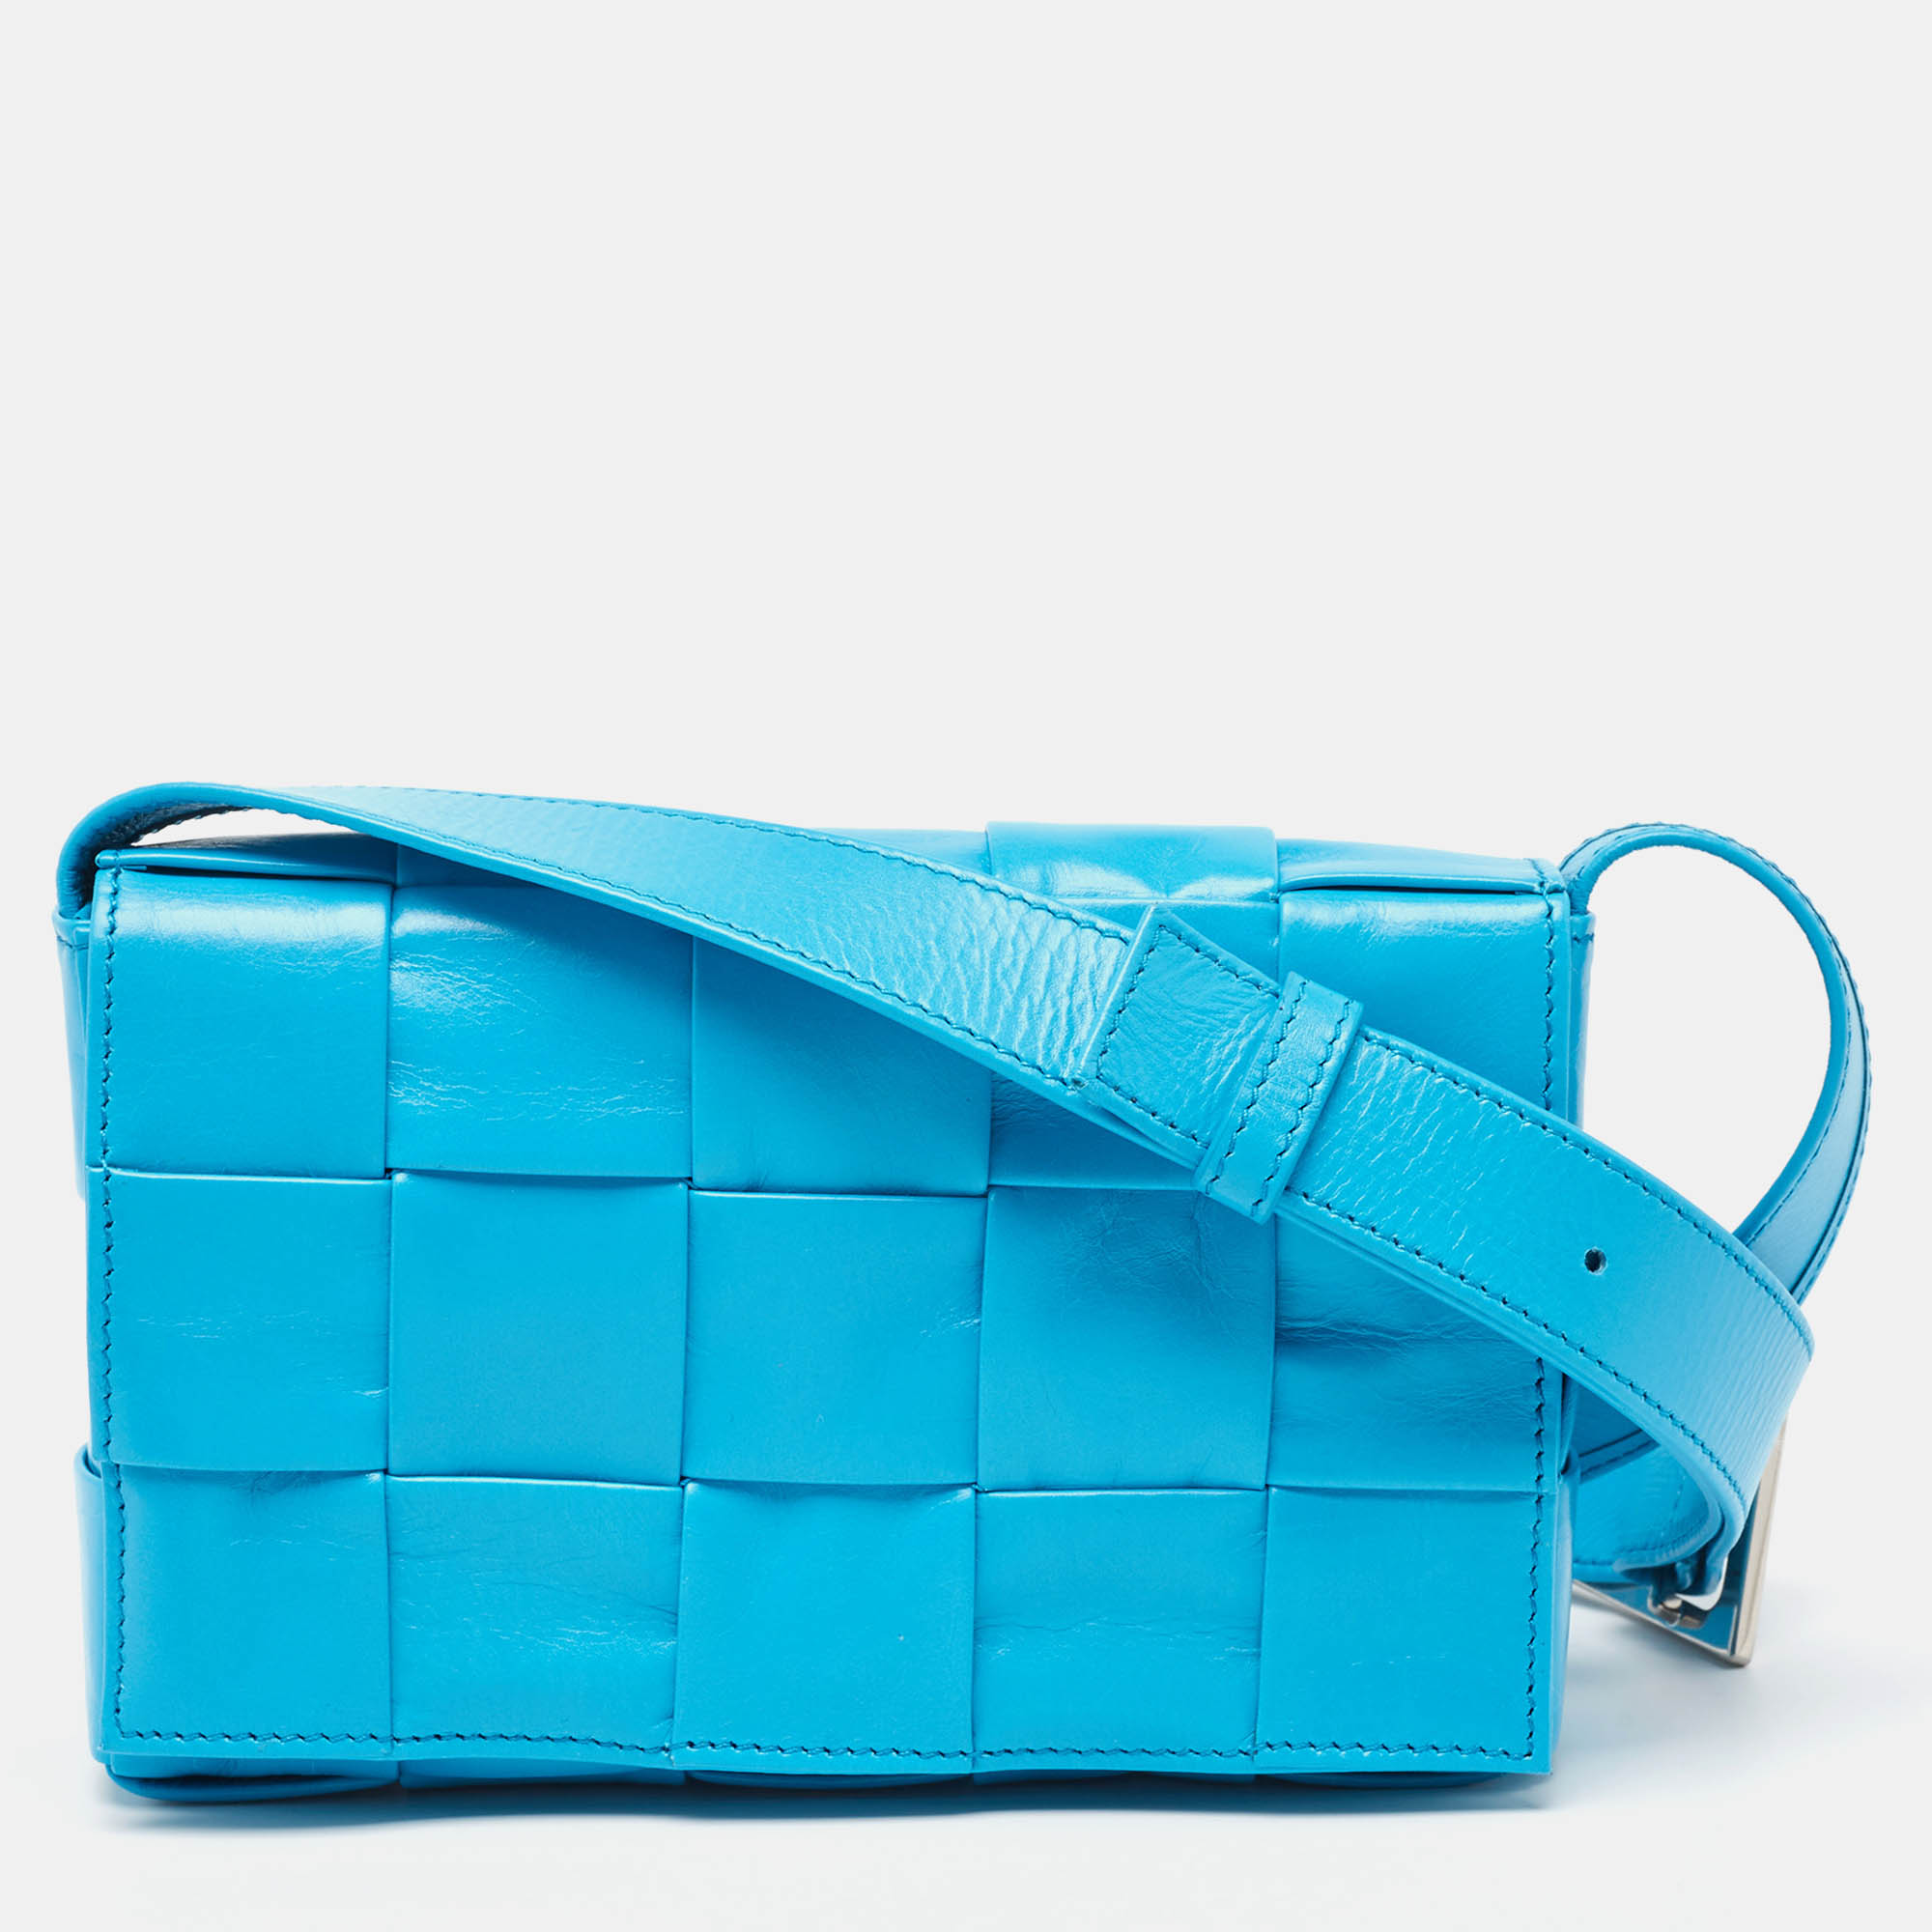 Bottega veneta sky blue glazed intrecciato leather small cassette shoulder bag